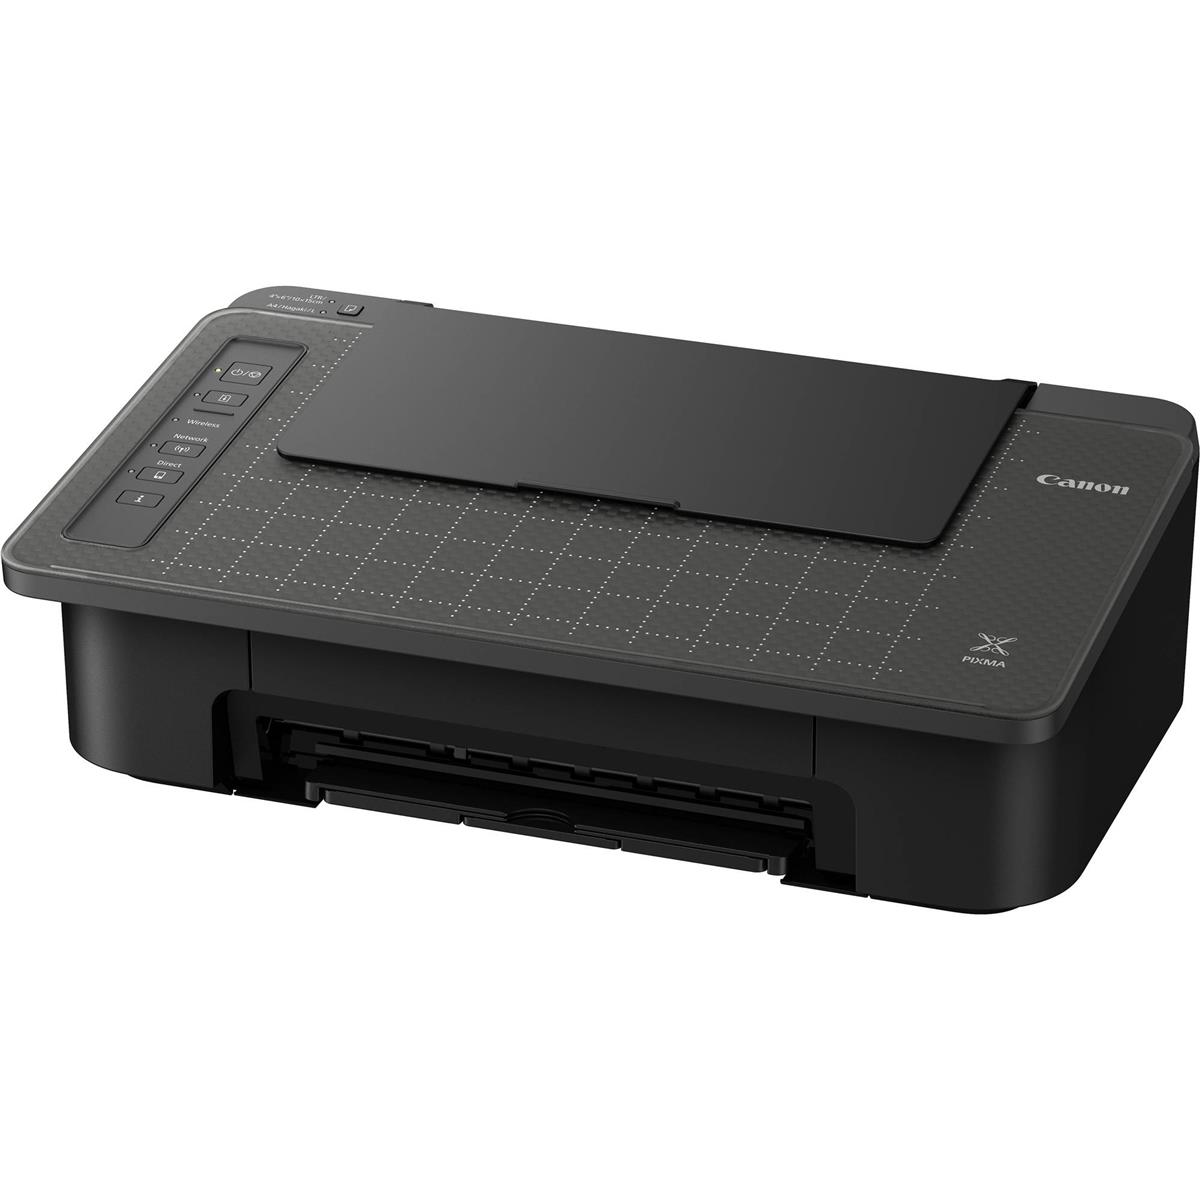 Image of Canon PIXMA TS302 Wireless Inkjet Printer